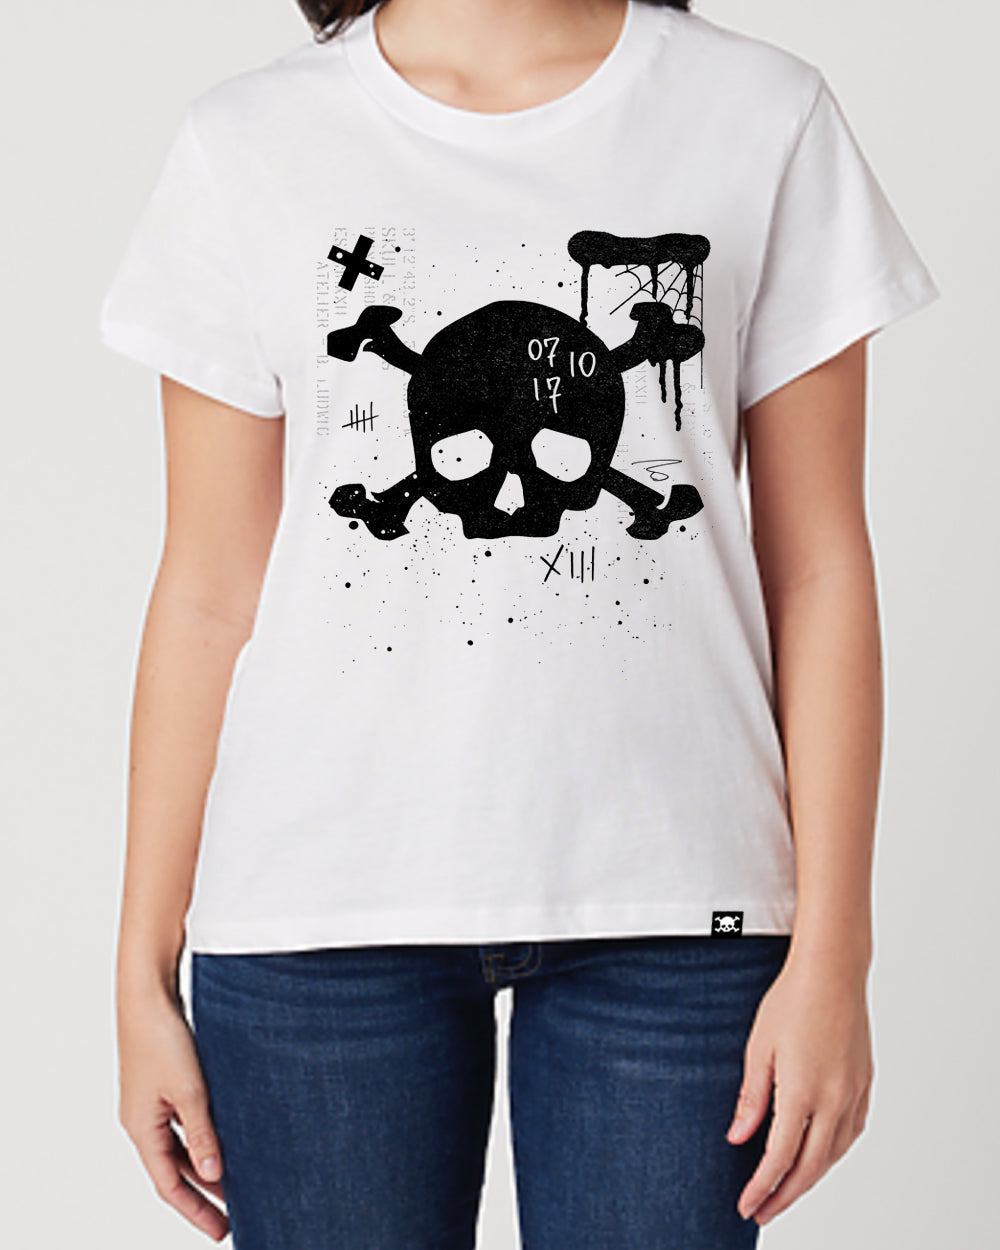 Skull & Bones T-shirt (Women